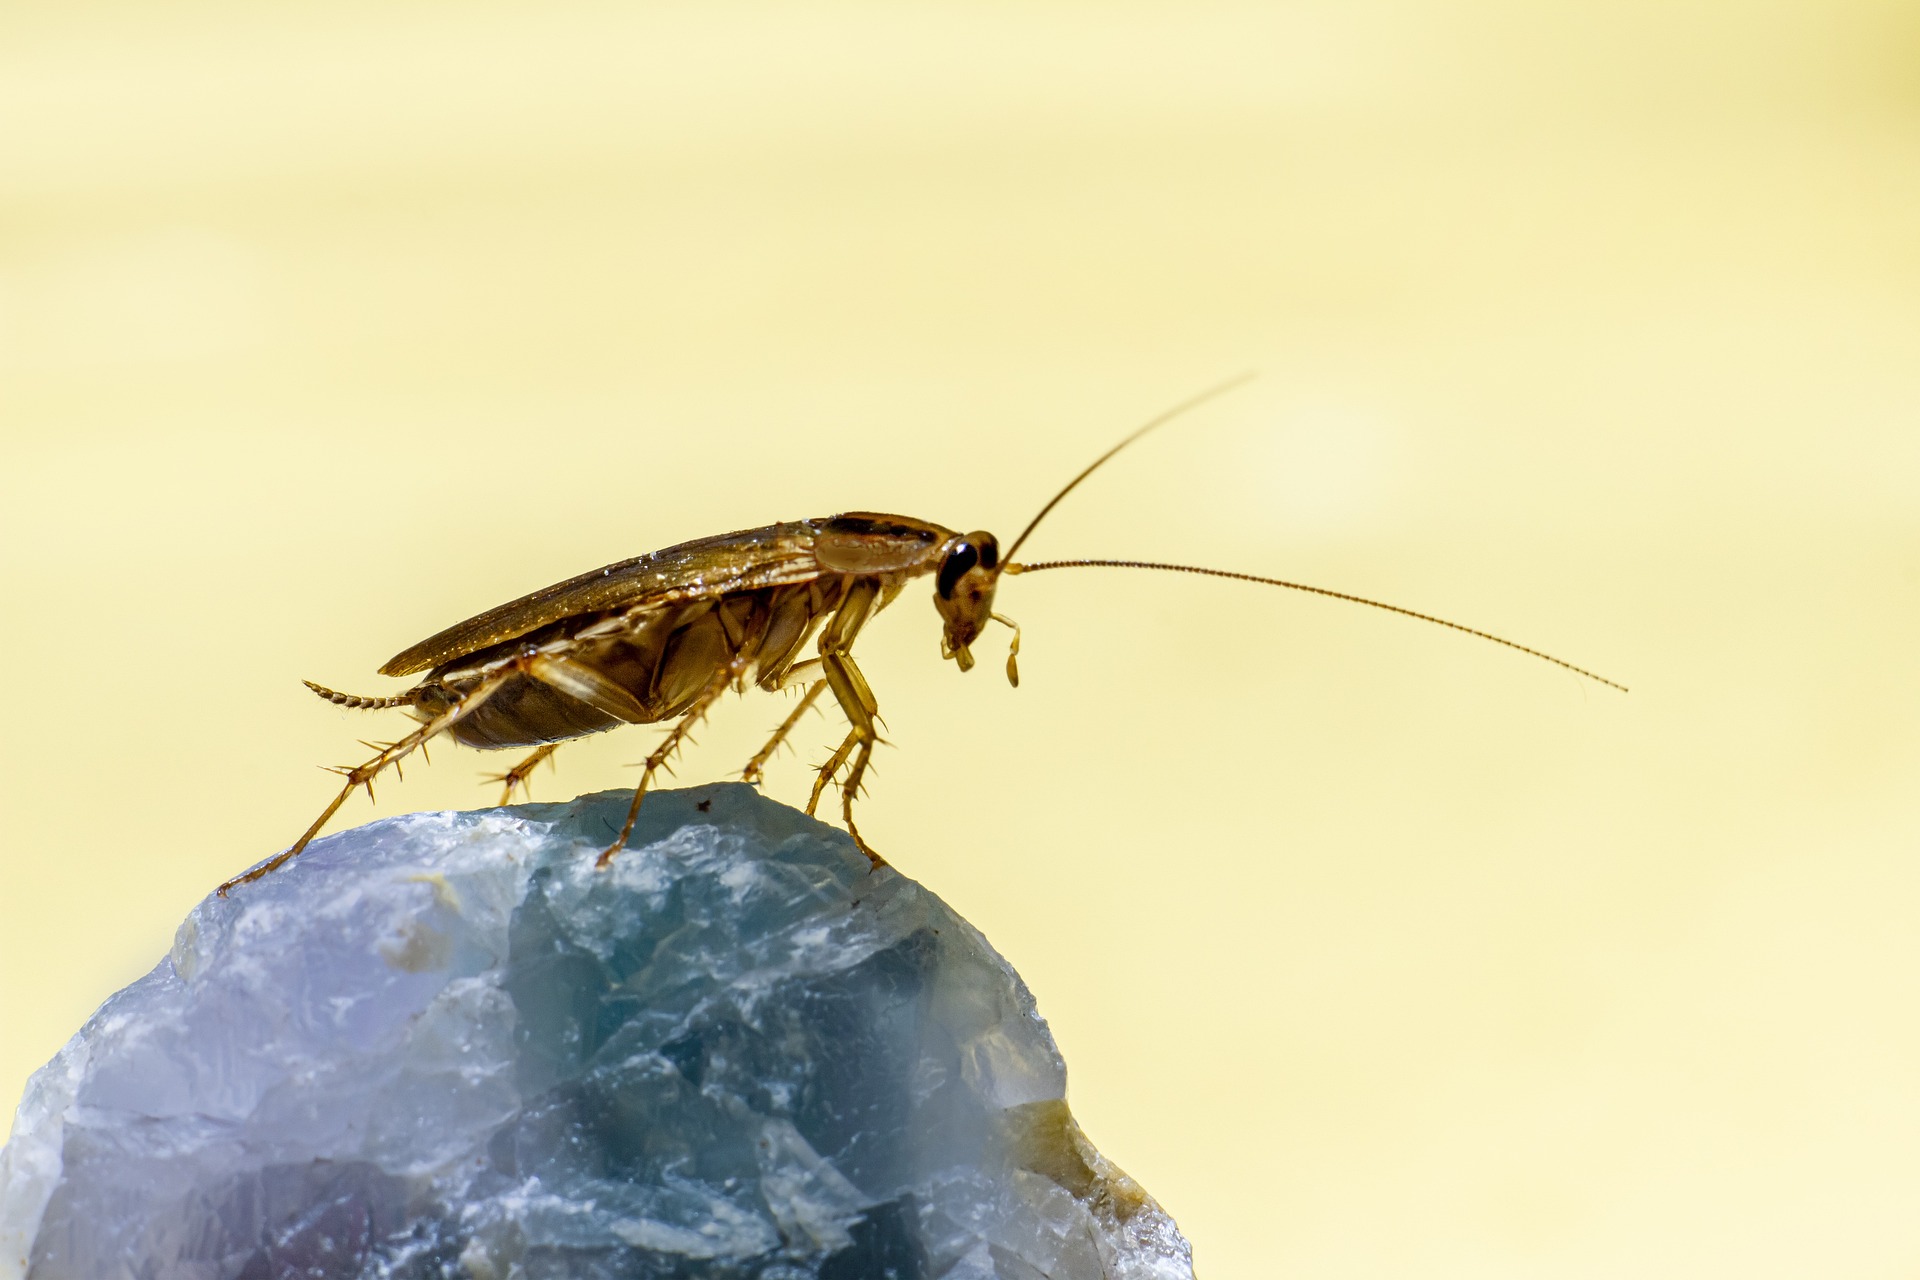 A cockroach on a rock.